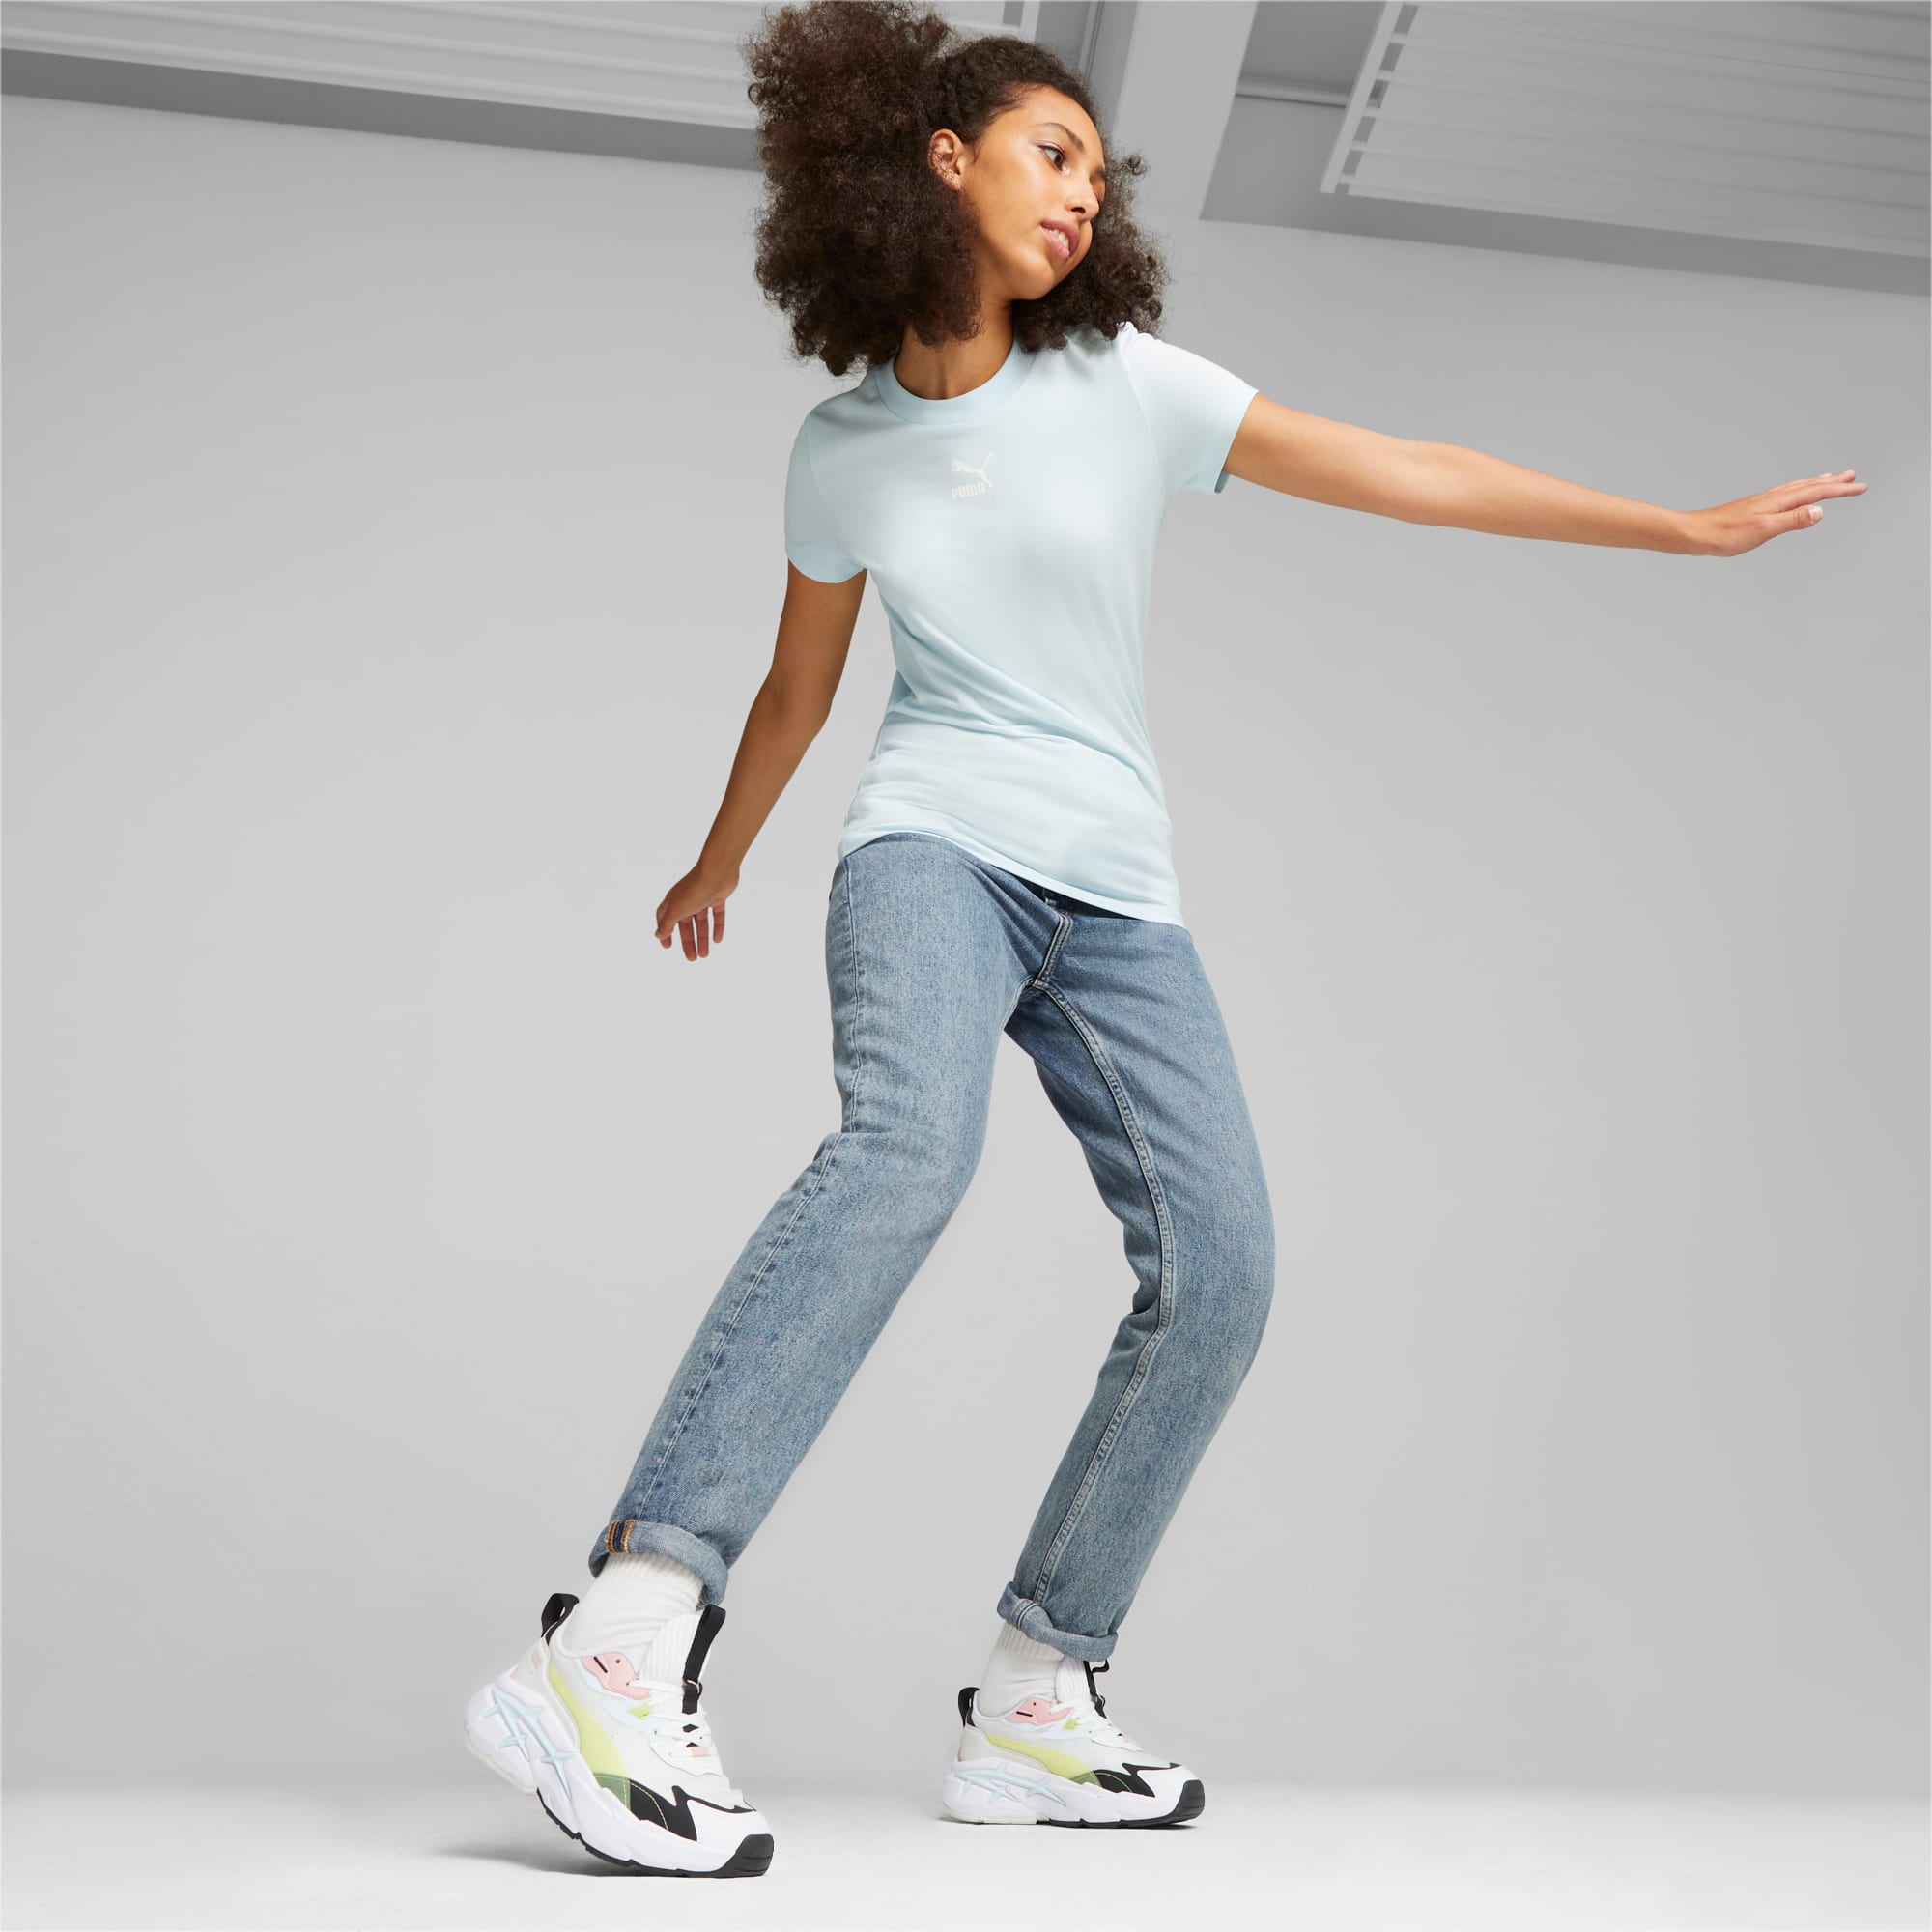 PUMA Spina Nitro Women's Sneakers, Vapor Grey/Light Lime, Size 35,5, Shoes